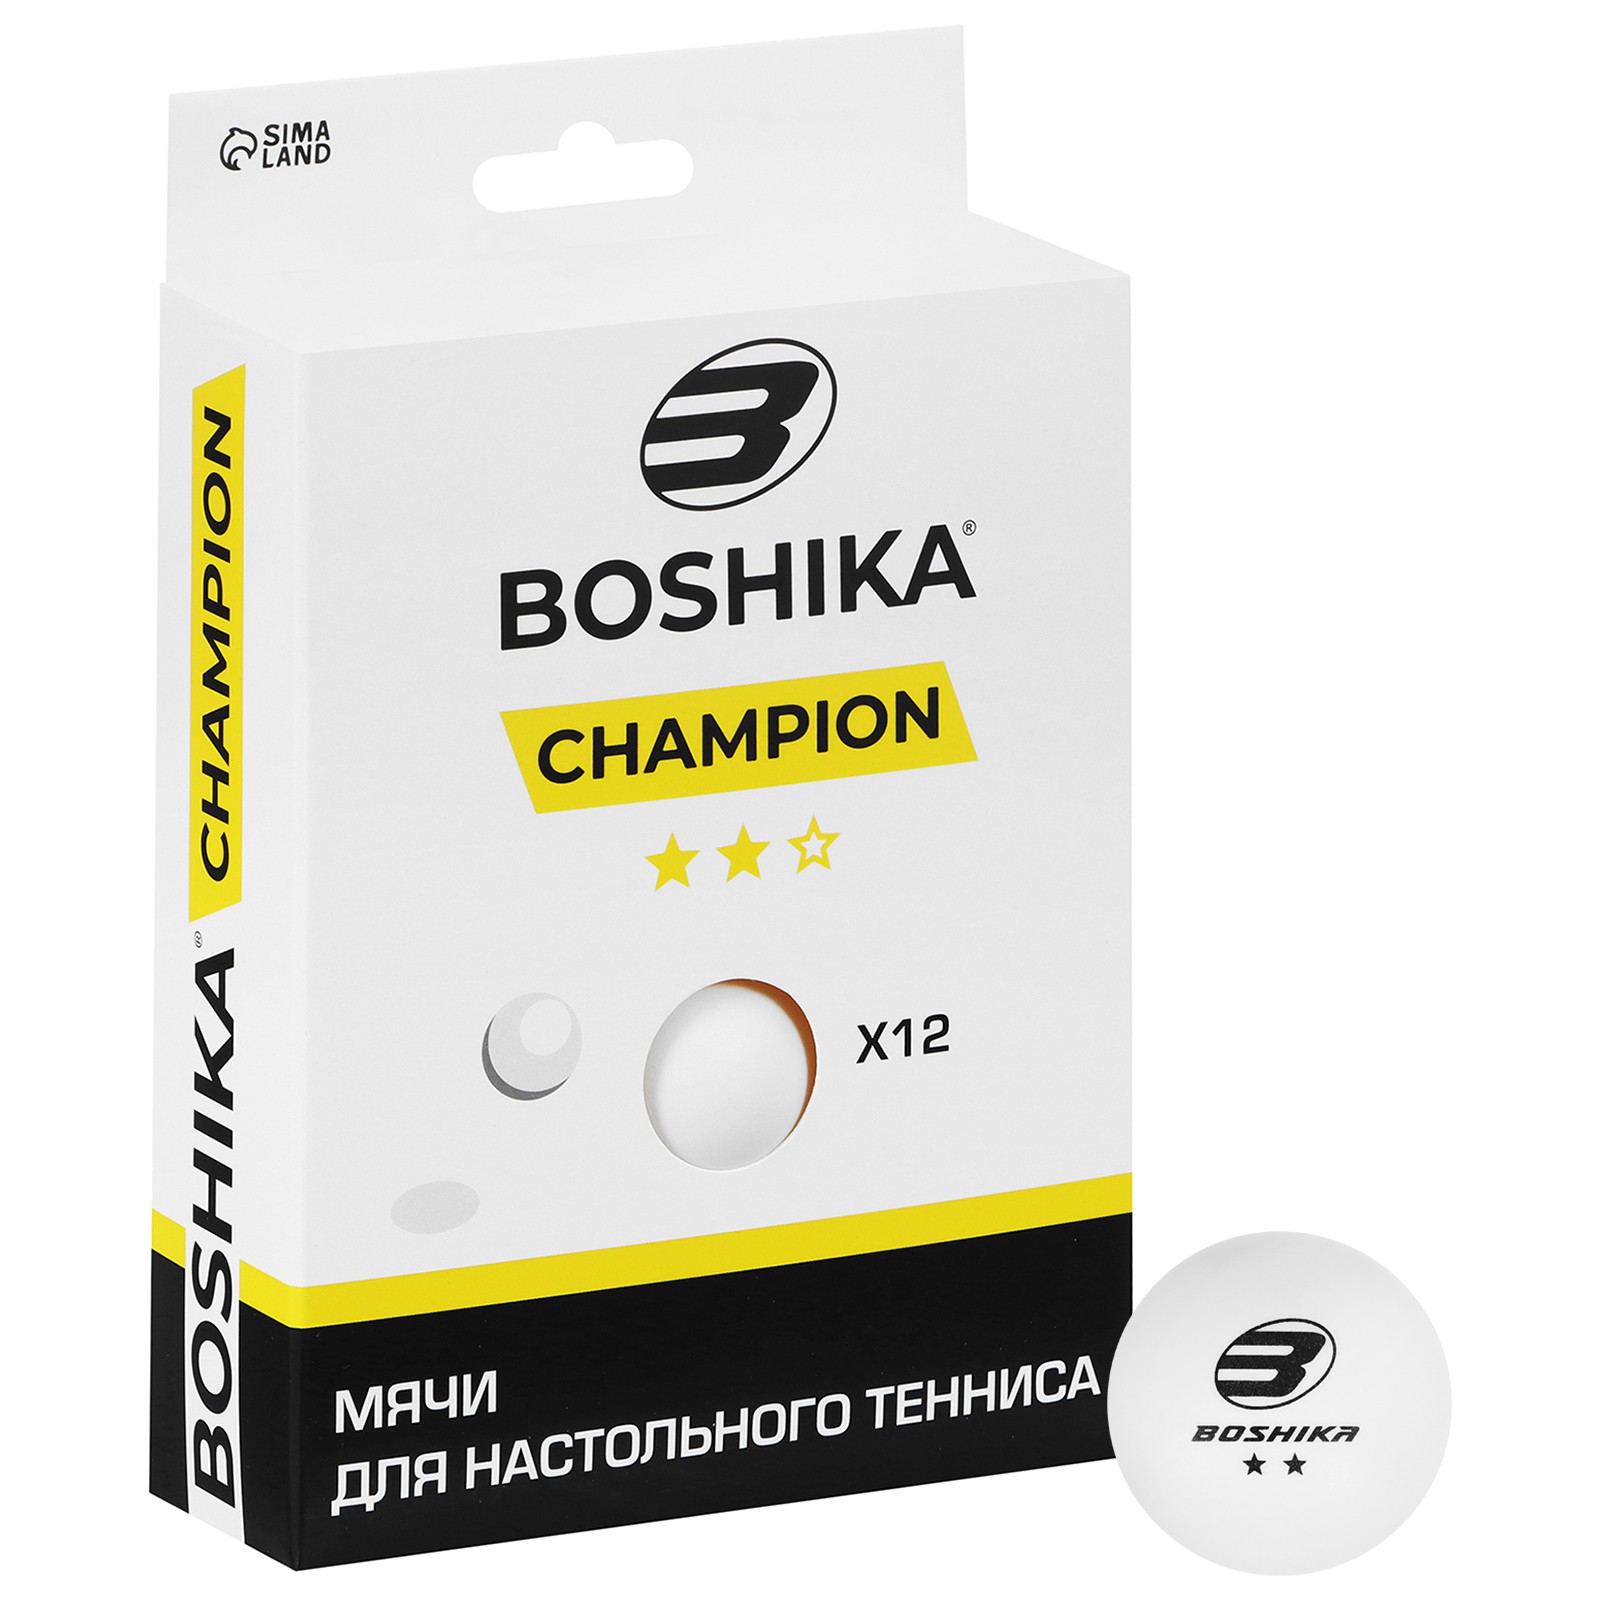 Набор BOSHIKA мячей для настольного тенниса Championship 2 (12 шт). цвет белый - фото 1